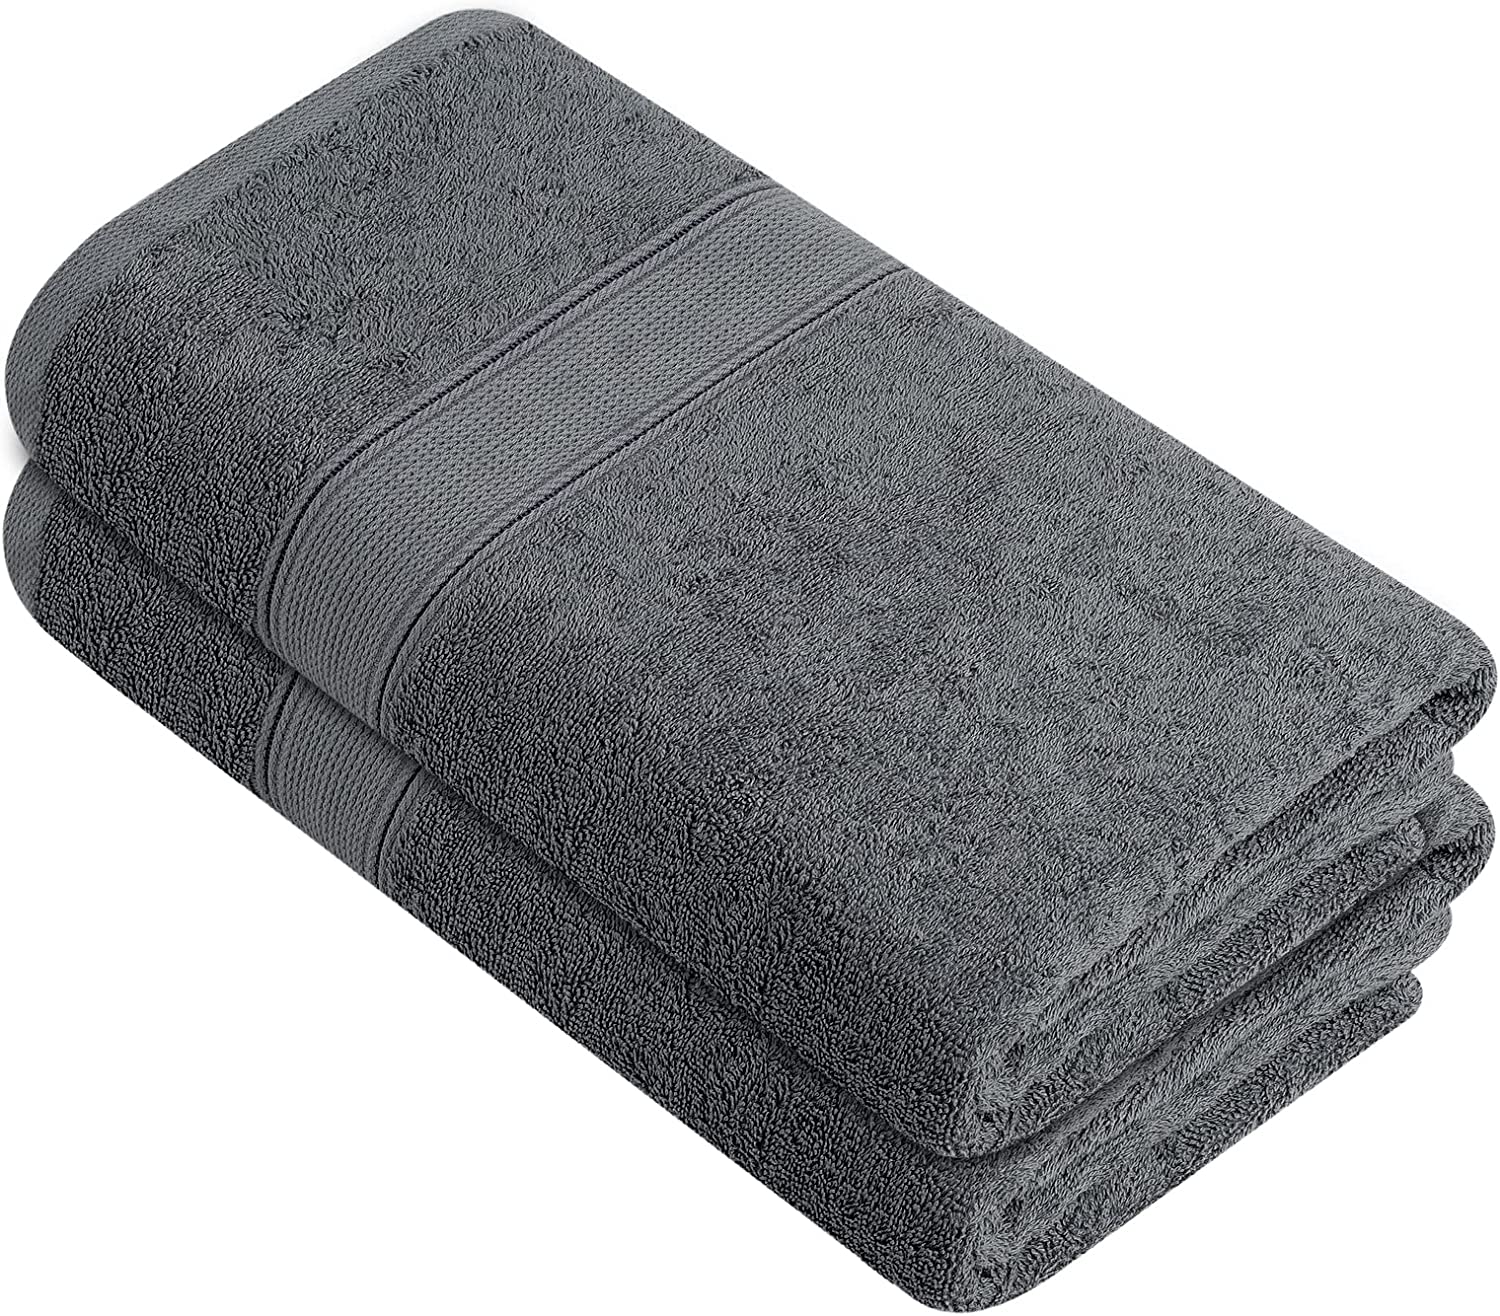 Tens Towels Dark Grey 2 Piece Large Bath Sheet Set 35 x 70 Inches